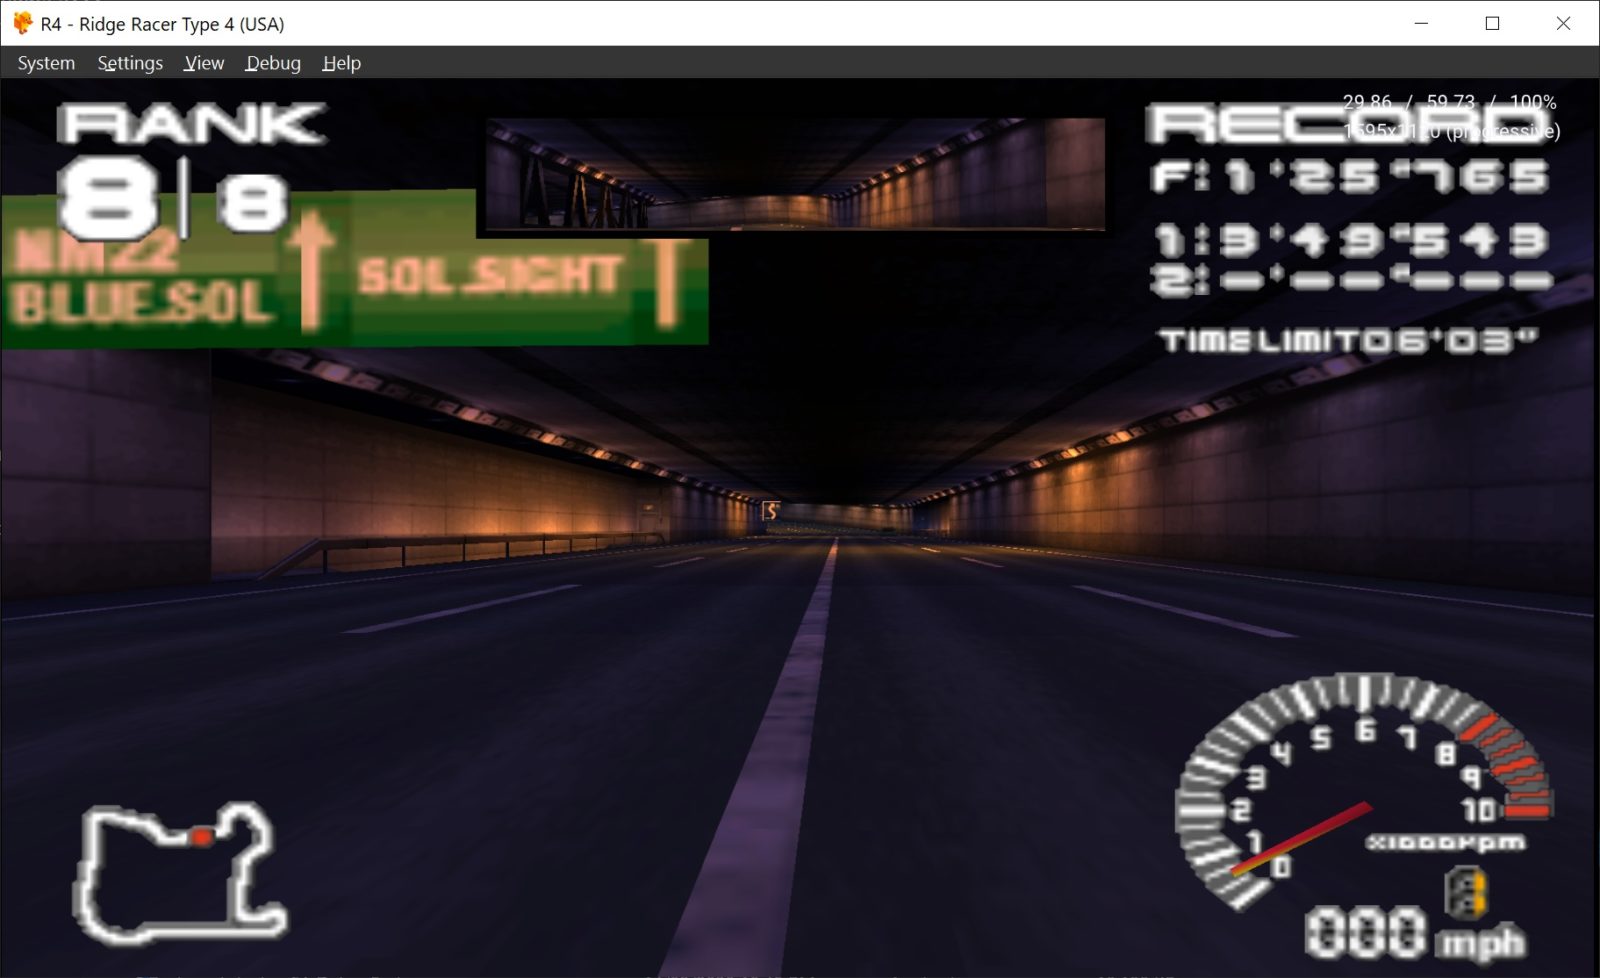 DuckStation. R4. Скриншот взят с официального сайта